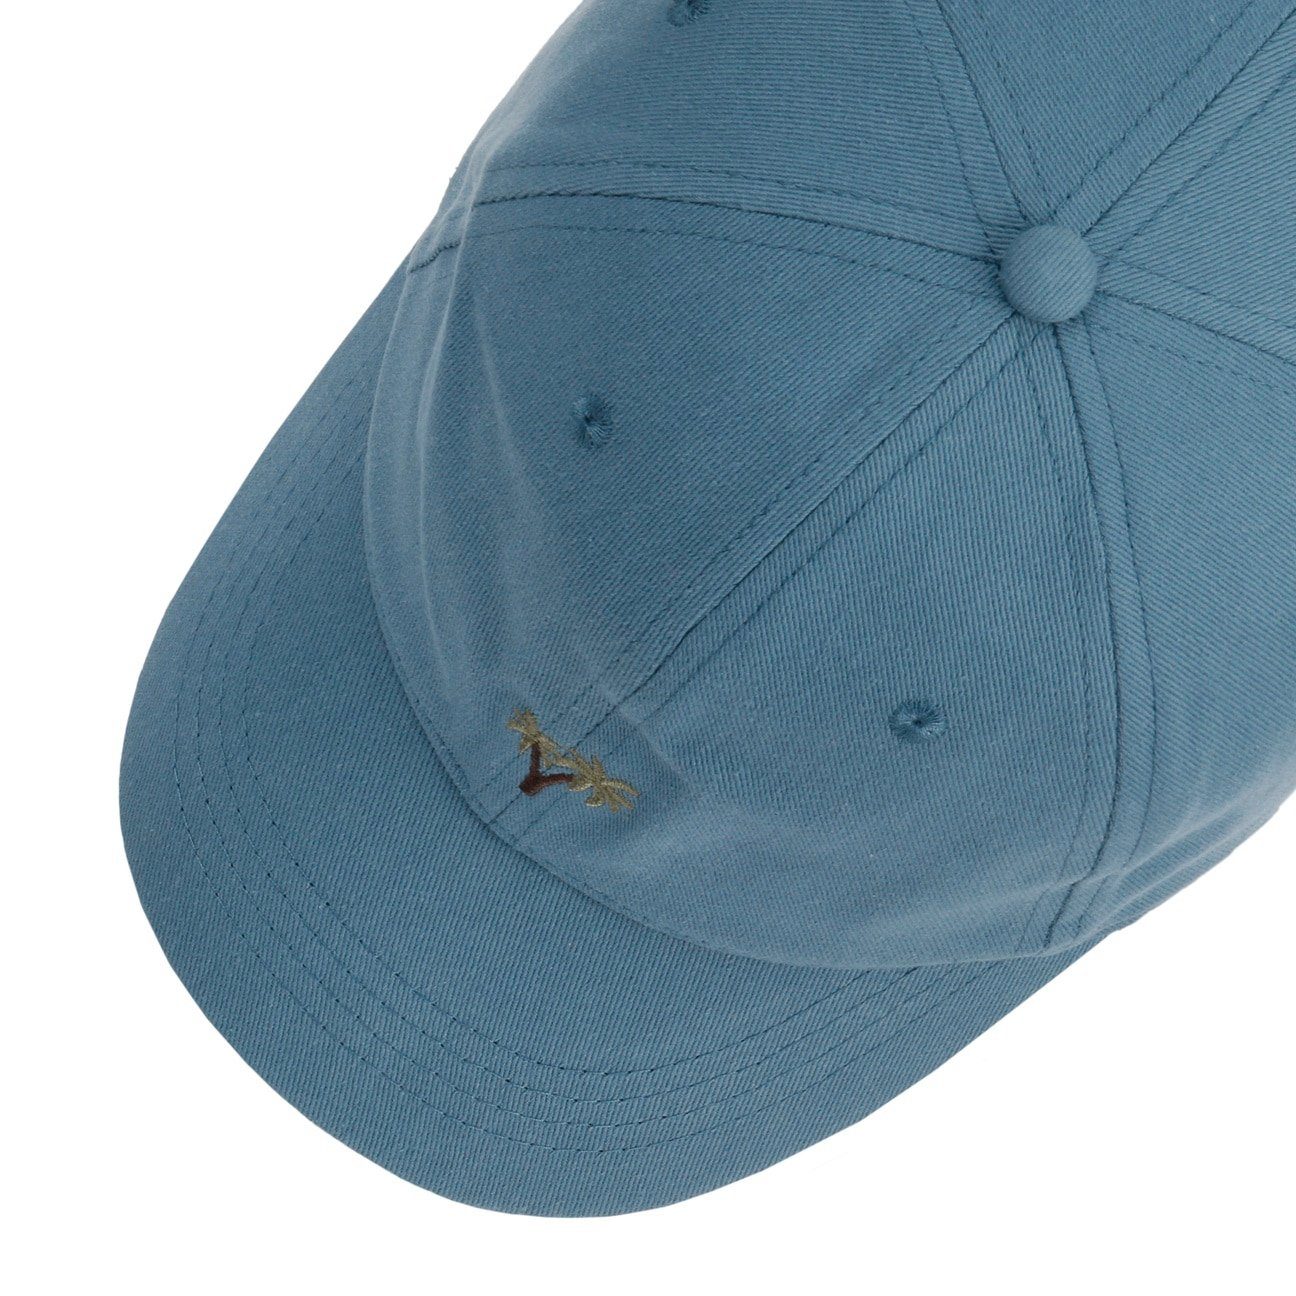 Barts Baseball Cap Metallschnalle (1-St) blau Basecap